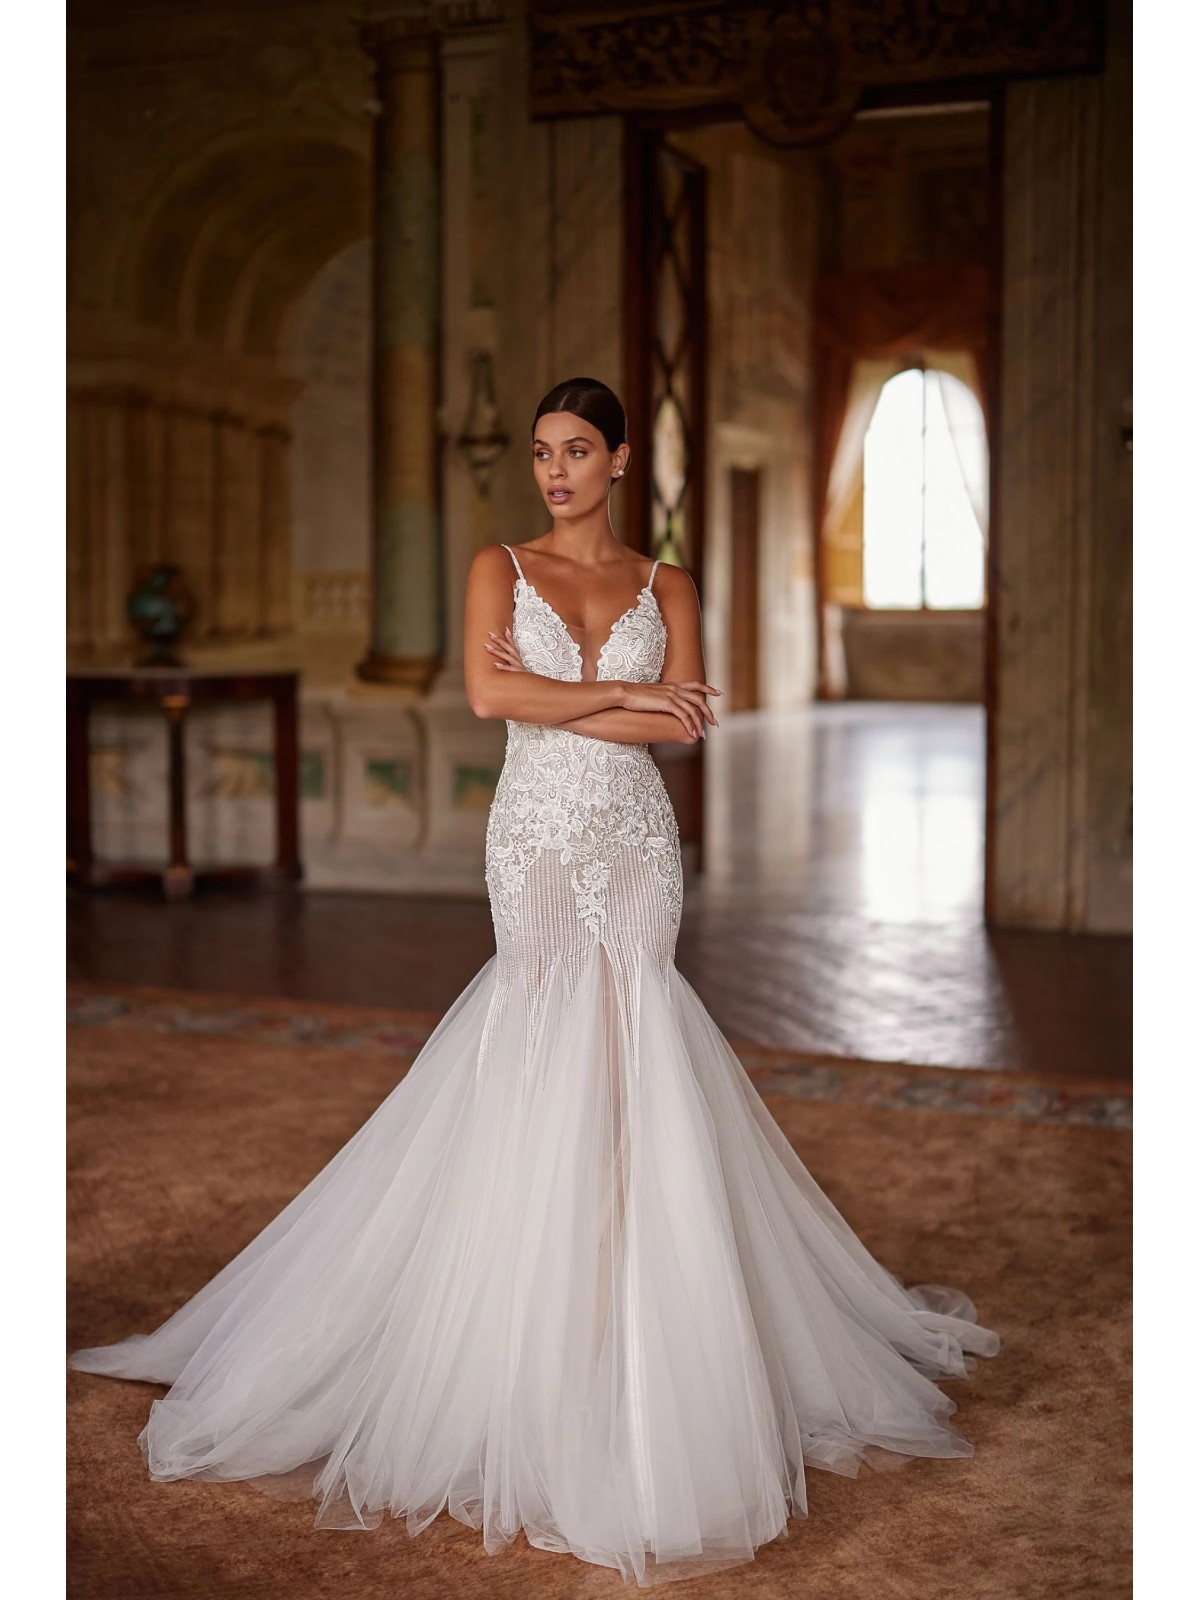 Luxury Wedding Dress with Beading, Skirt with Lining - Enraptured Bliss - LIDA-01344.42.17